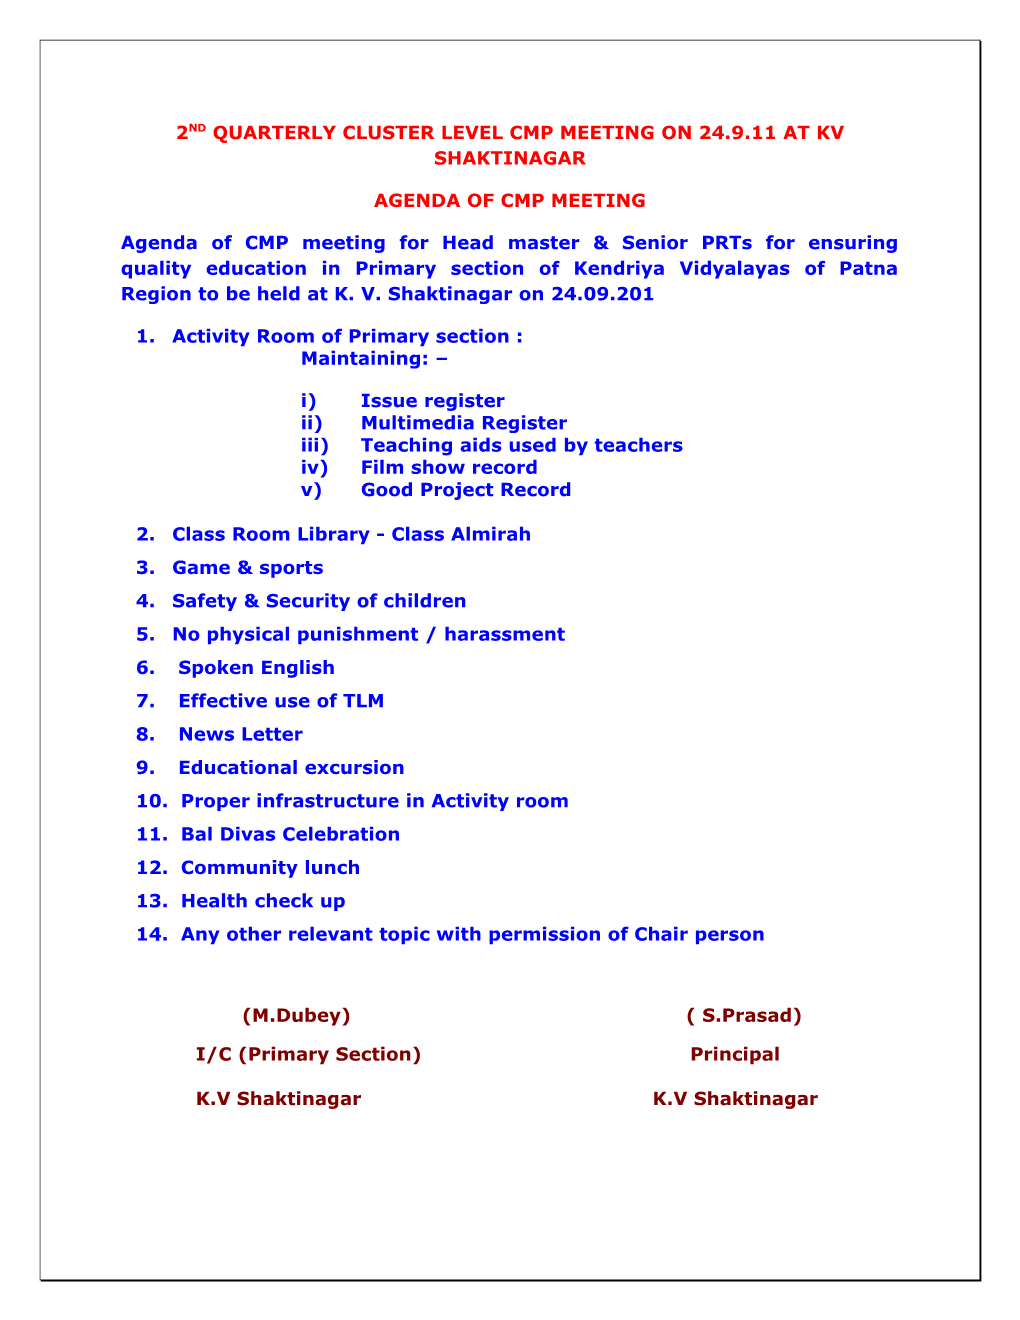 2Nd Quarterly Cluster Level Cmp Meeting on 24.9.11 at Kv Shaktinagar